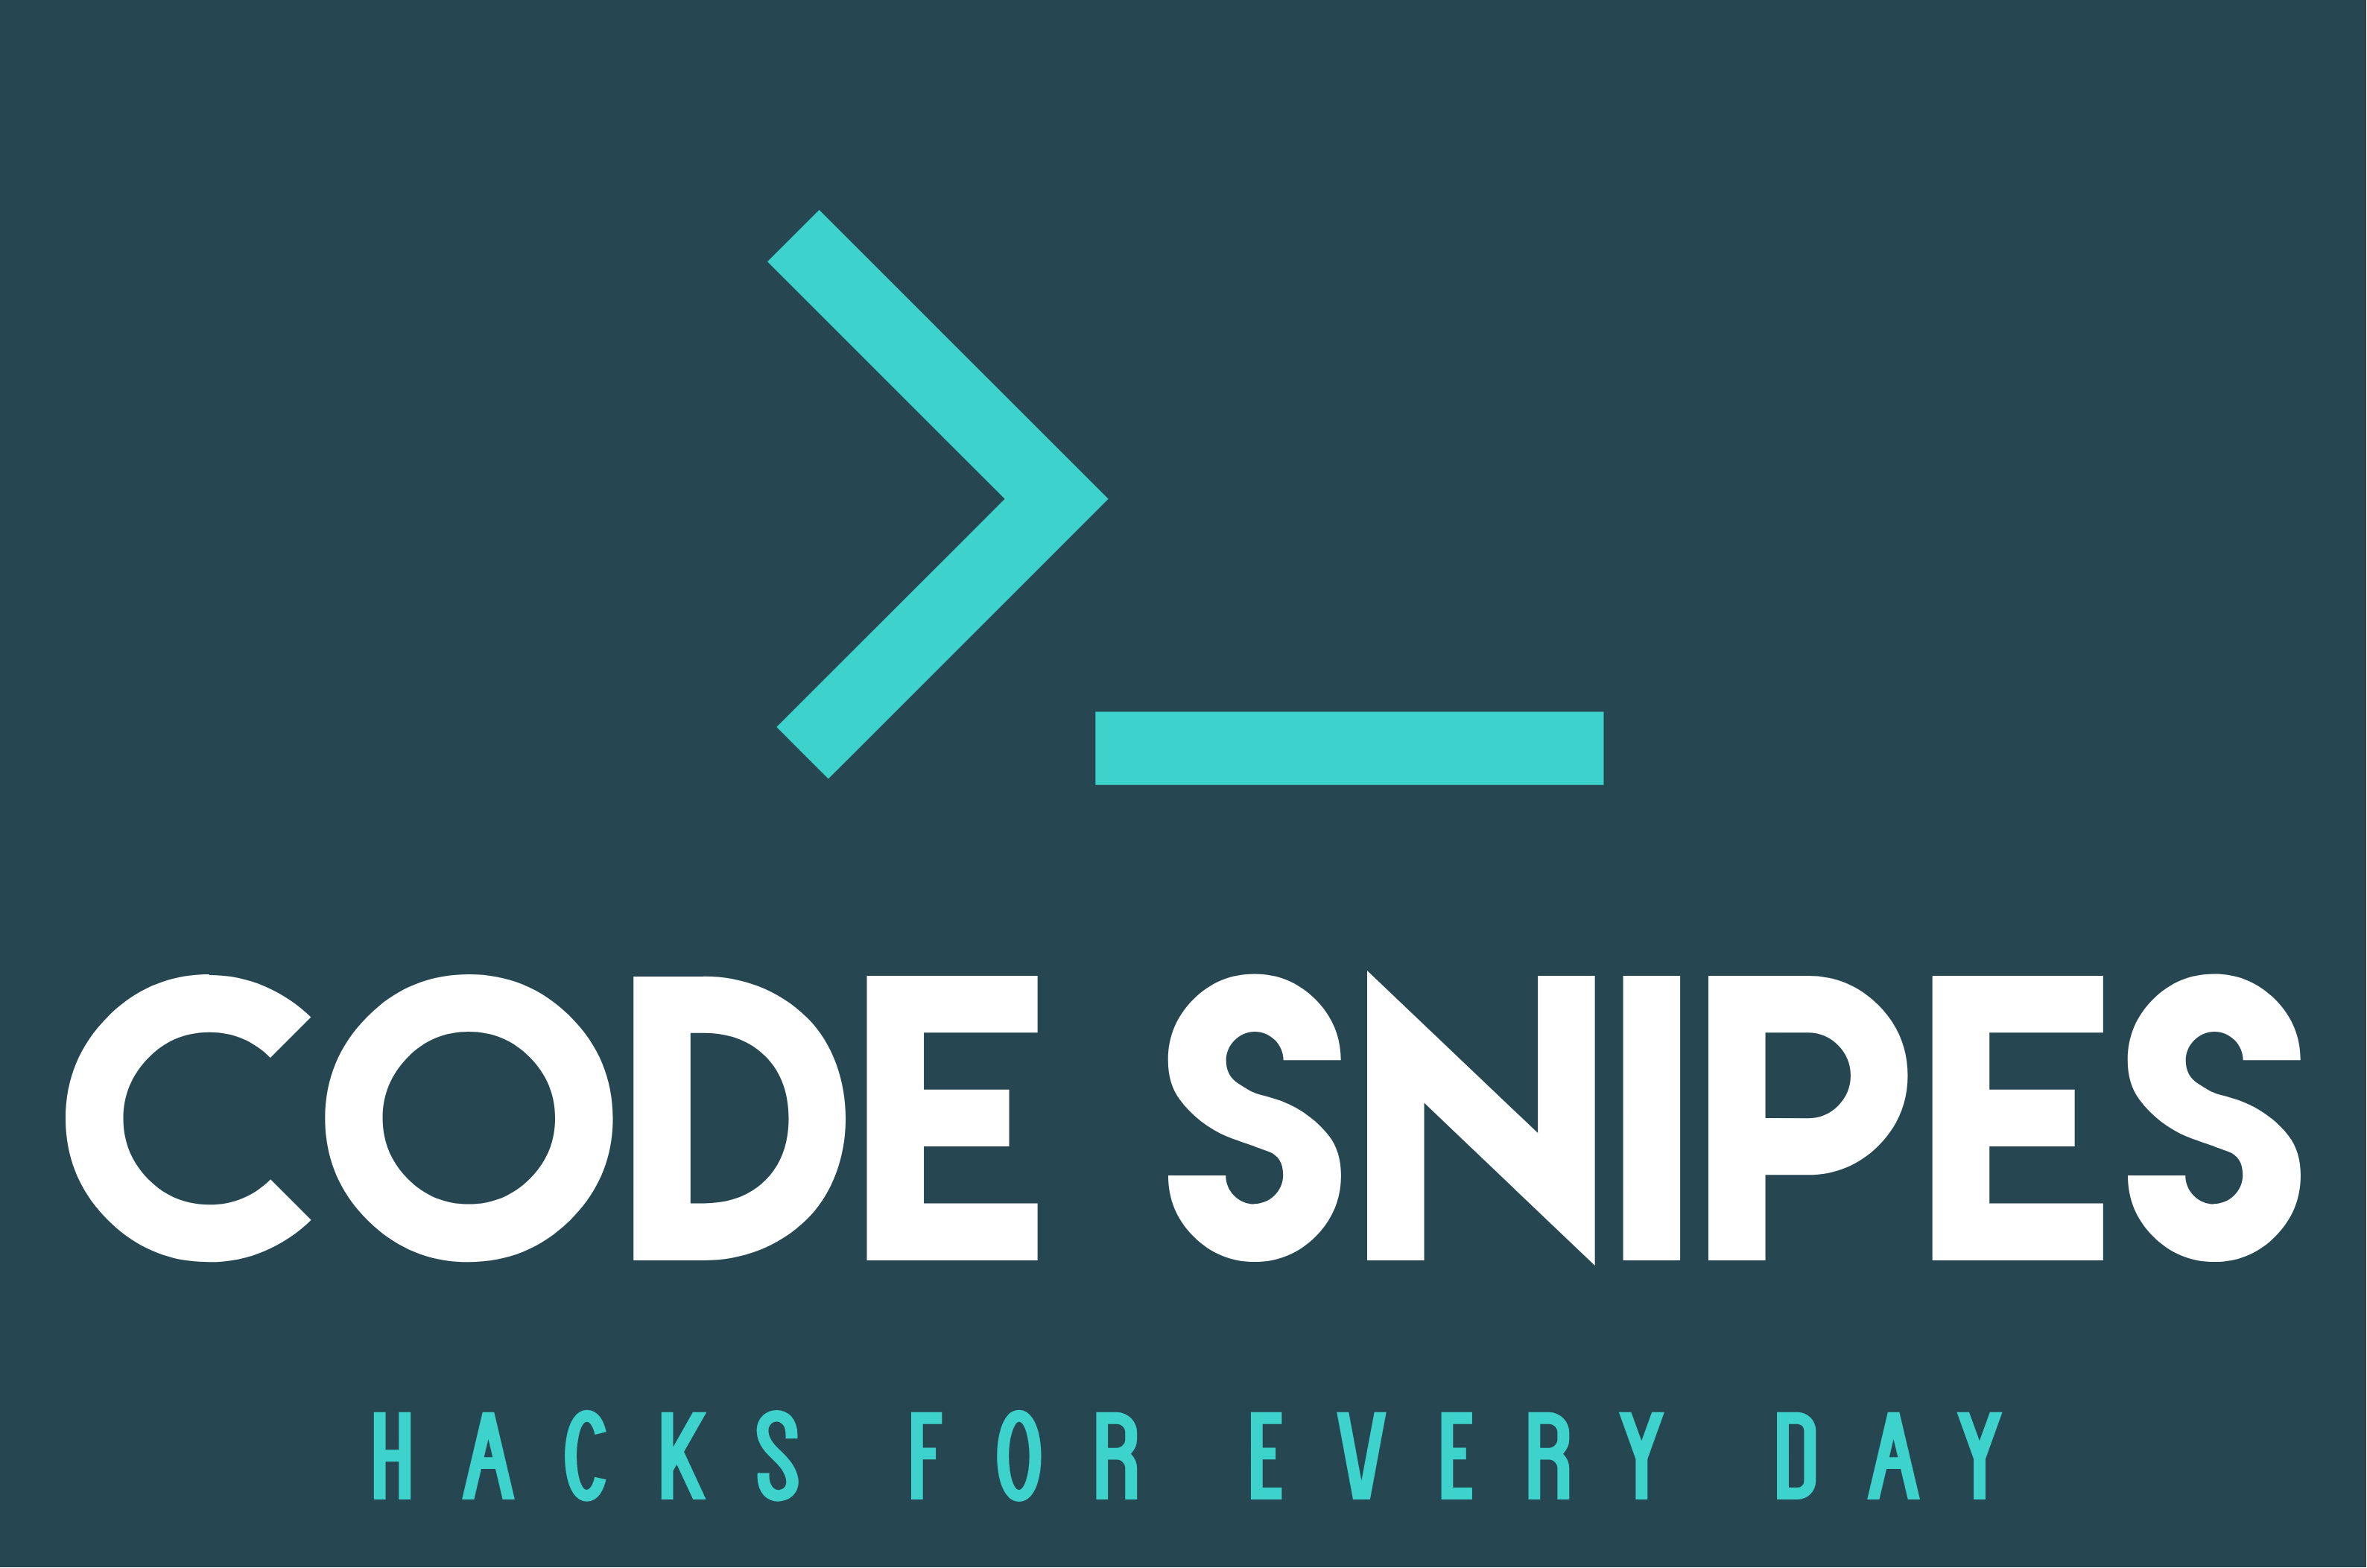 Code Snipes